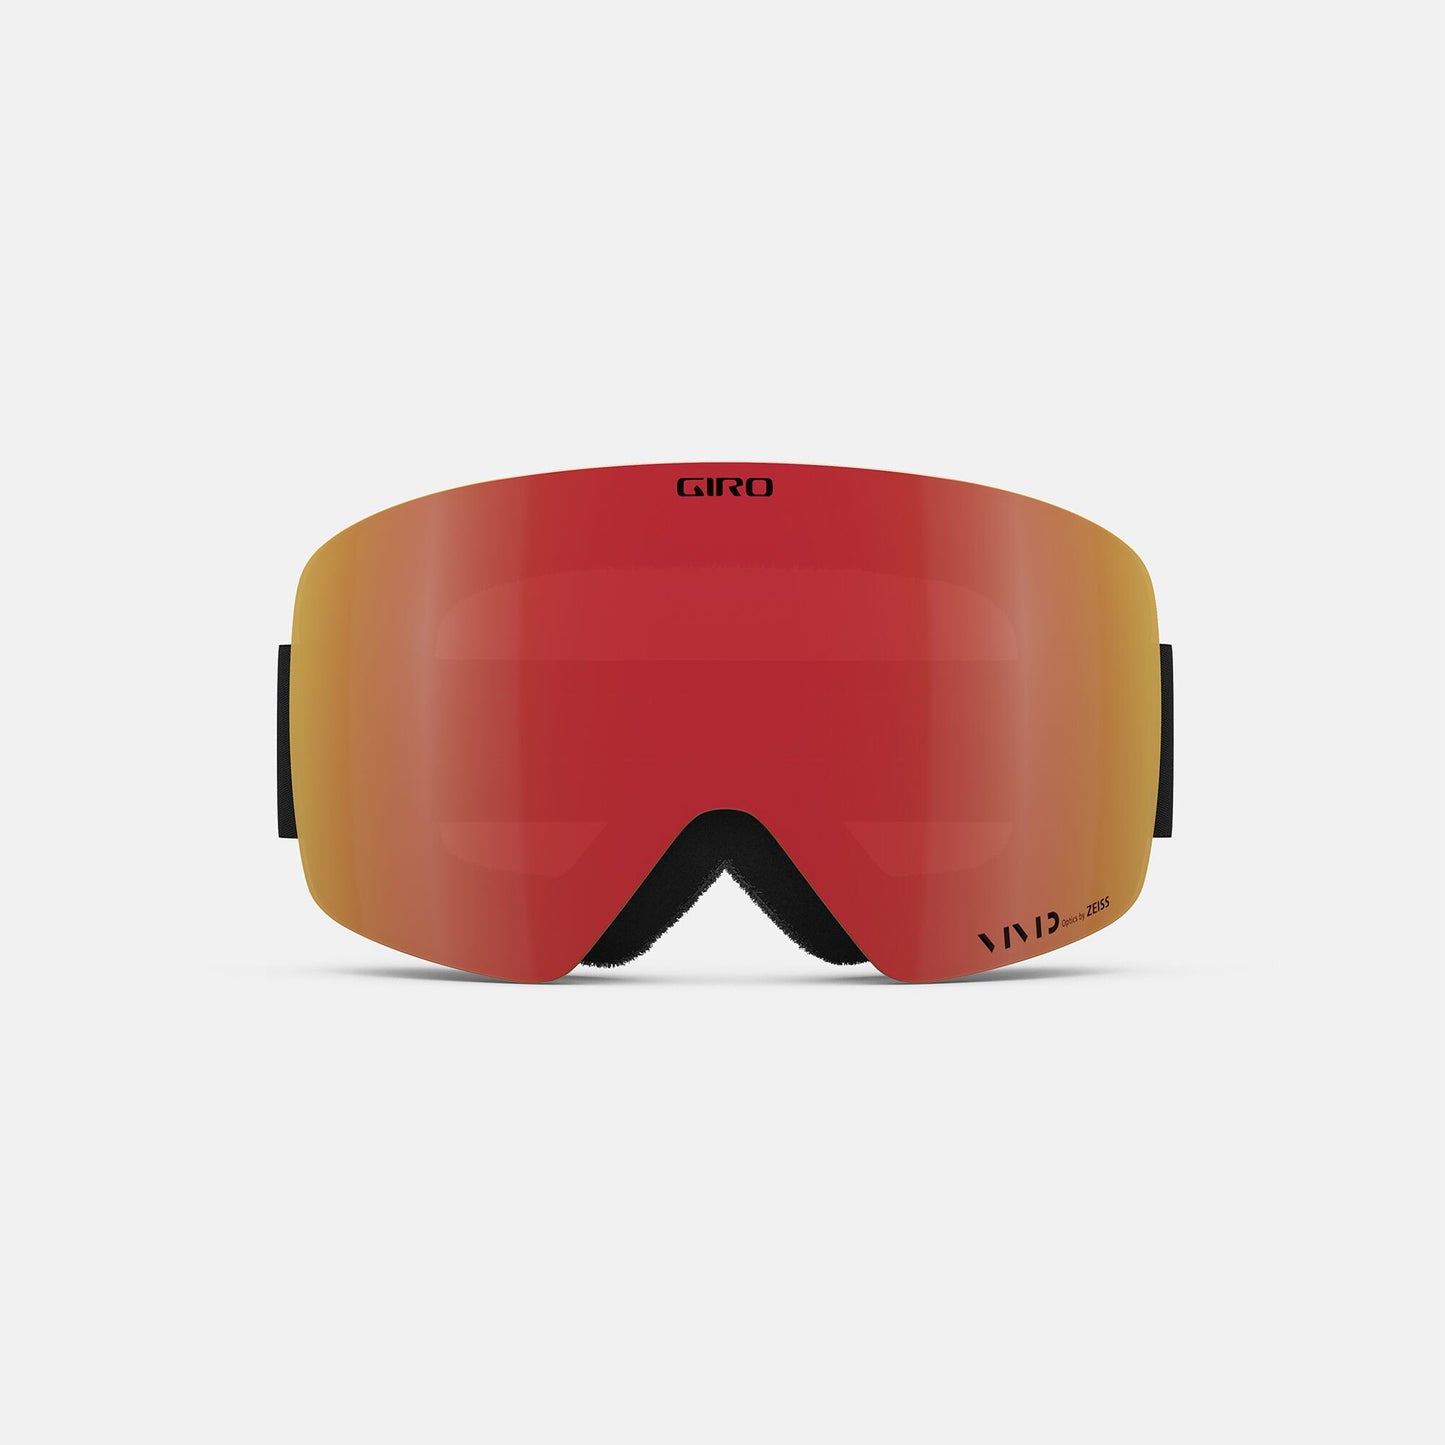 Giro Women's Contour RS Snow Goggles Black Wordmark Vivid Ember Snow Goggles